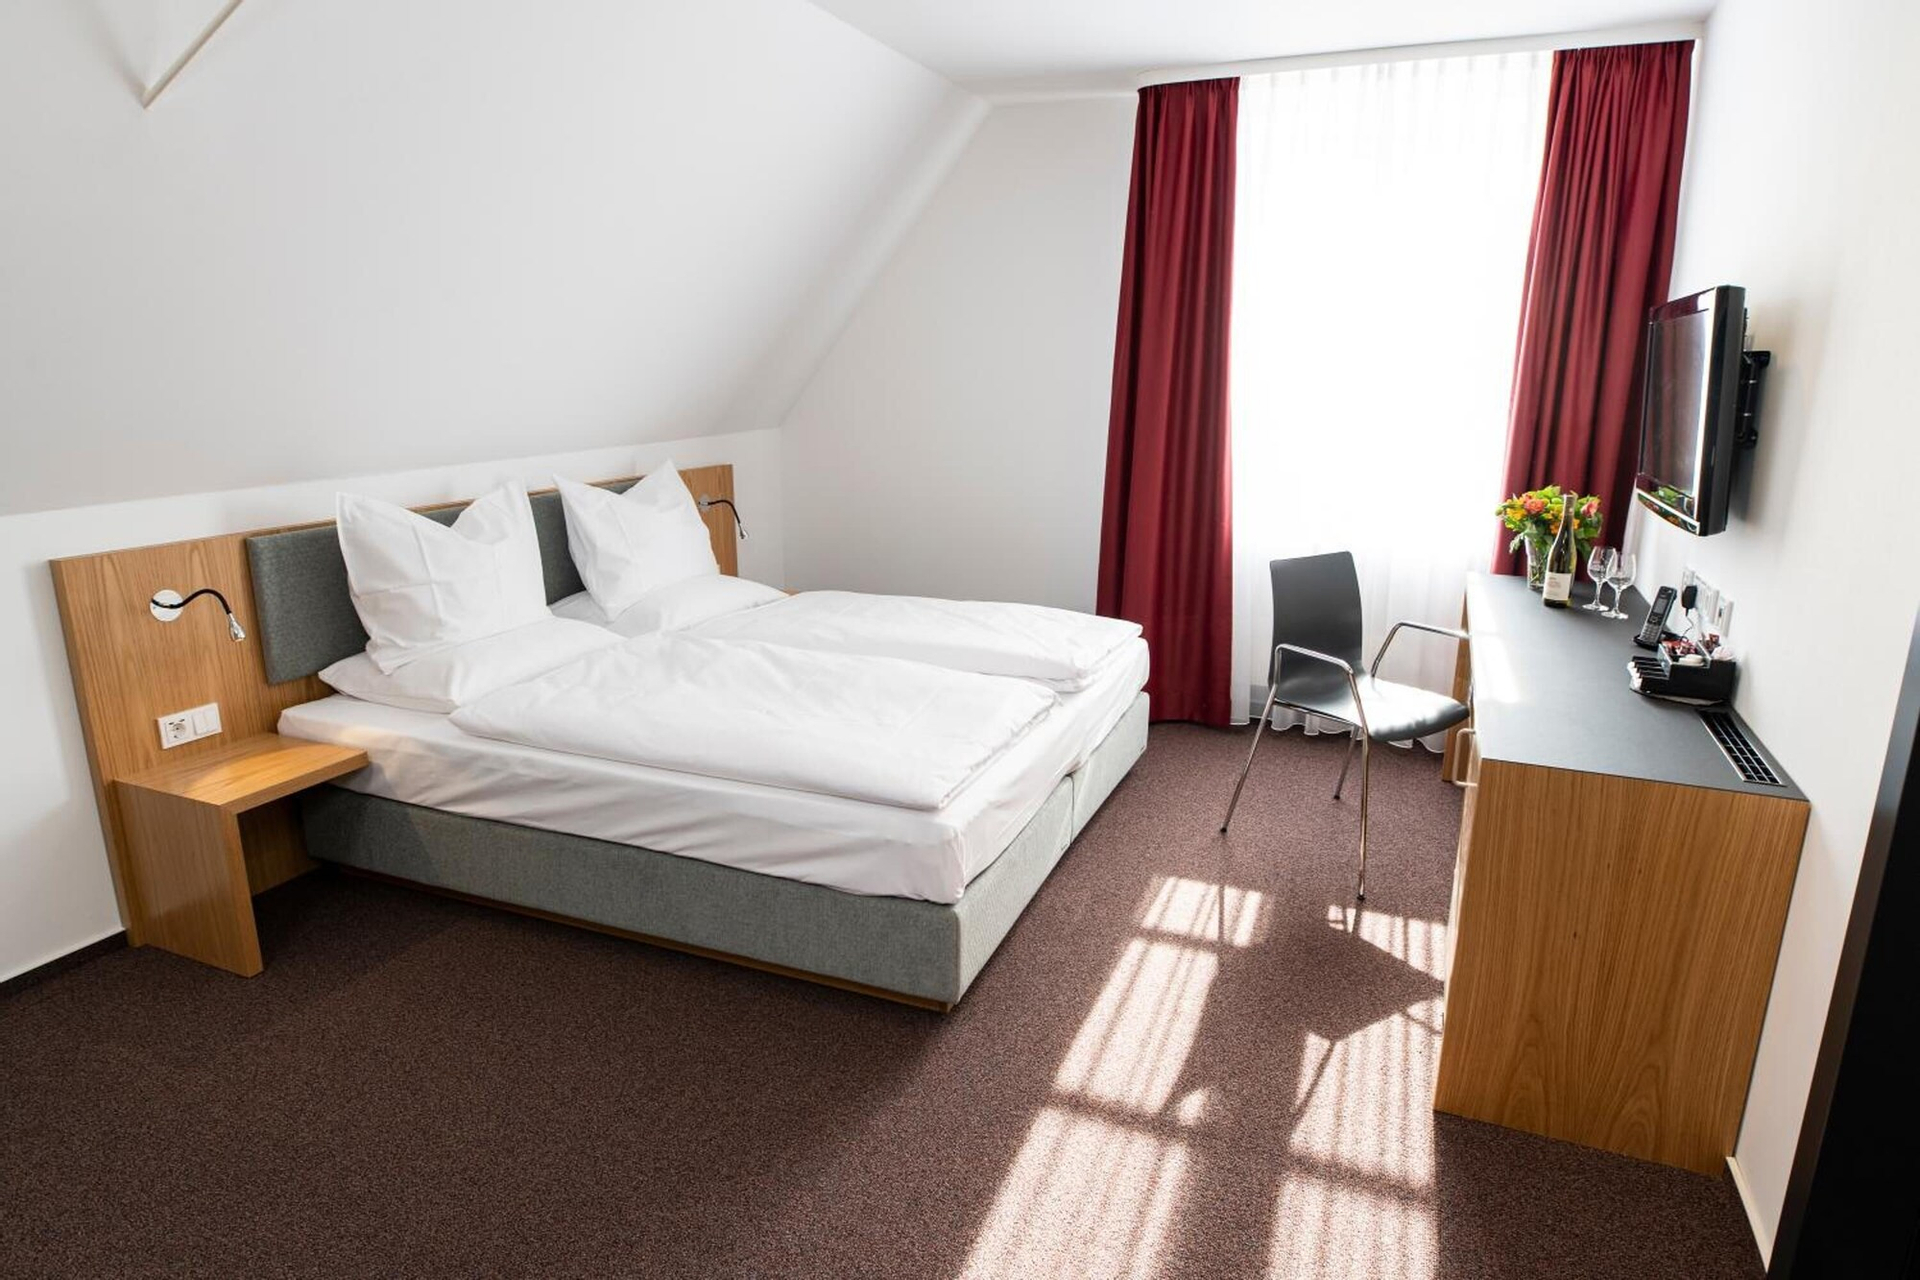 Bedroom 2, Hotel Kloster Eberbach, Rheingau-Taunus-Kreis